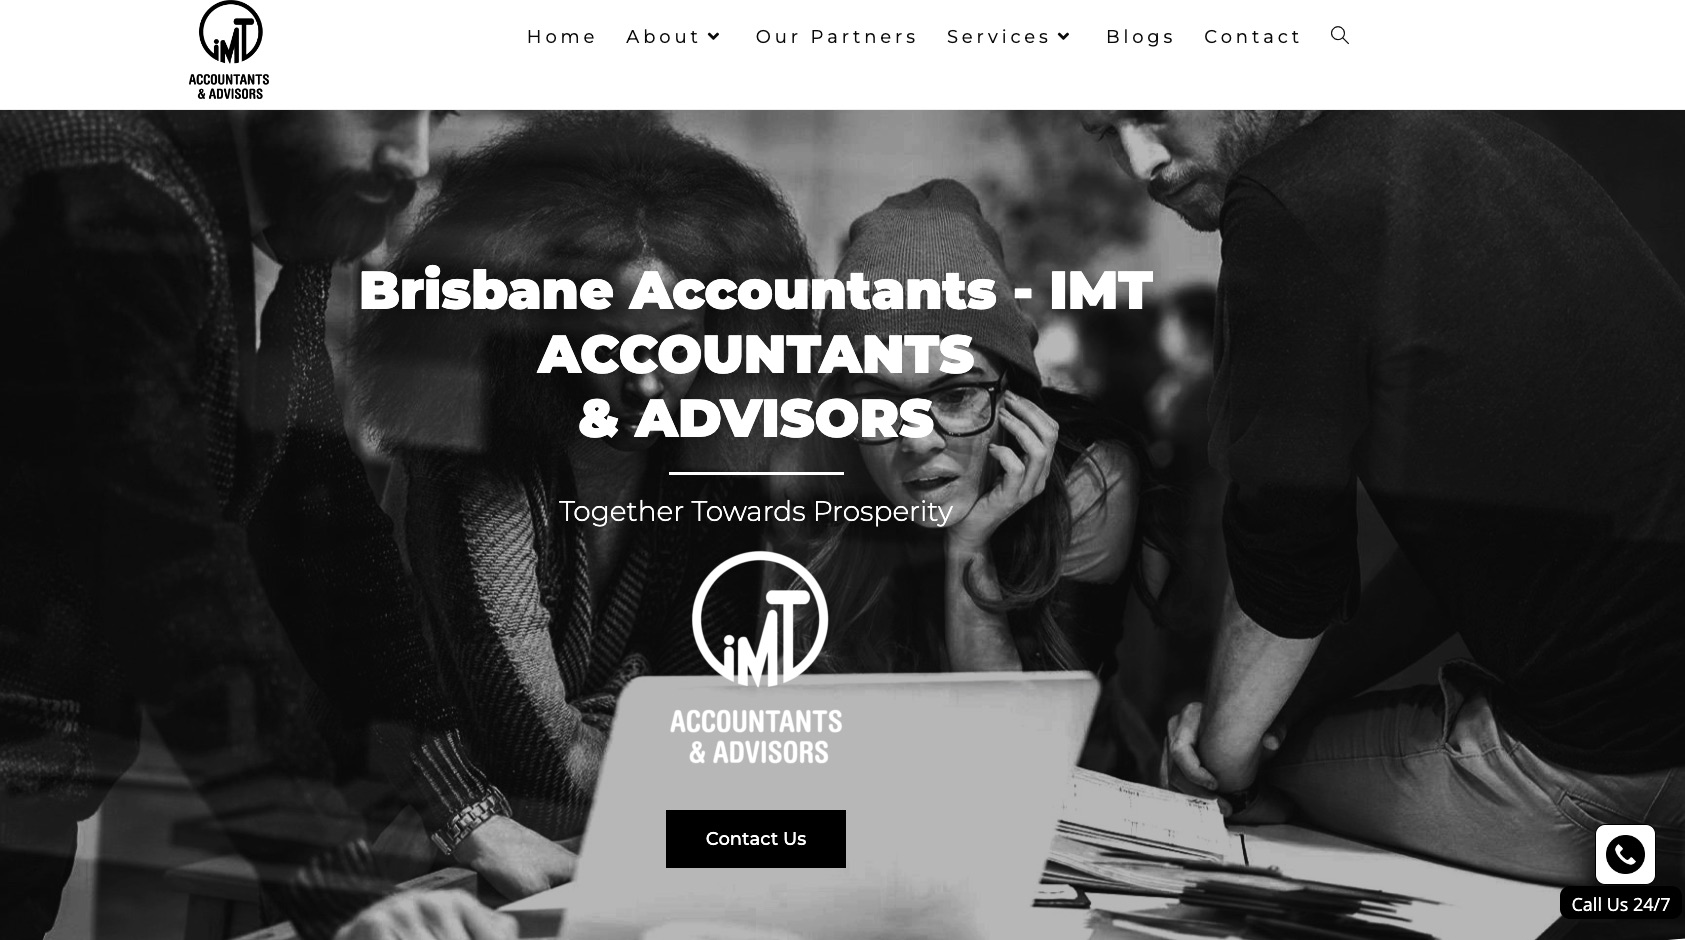 imt accountants & advisors